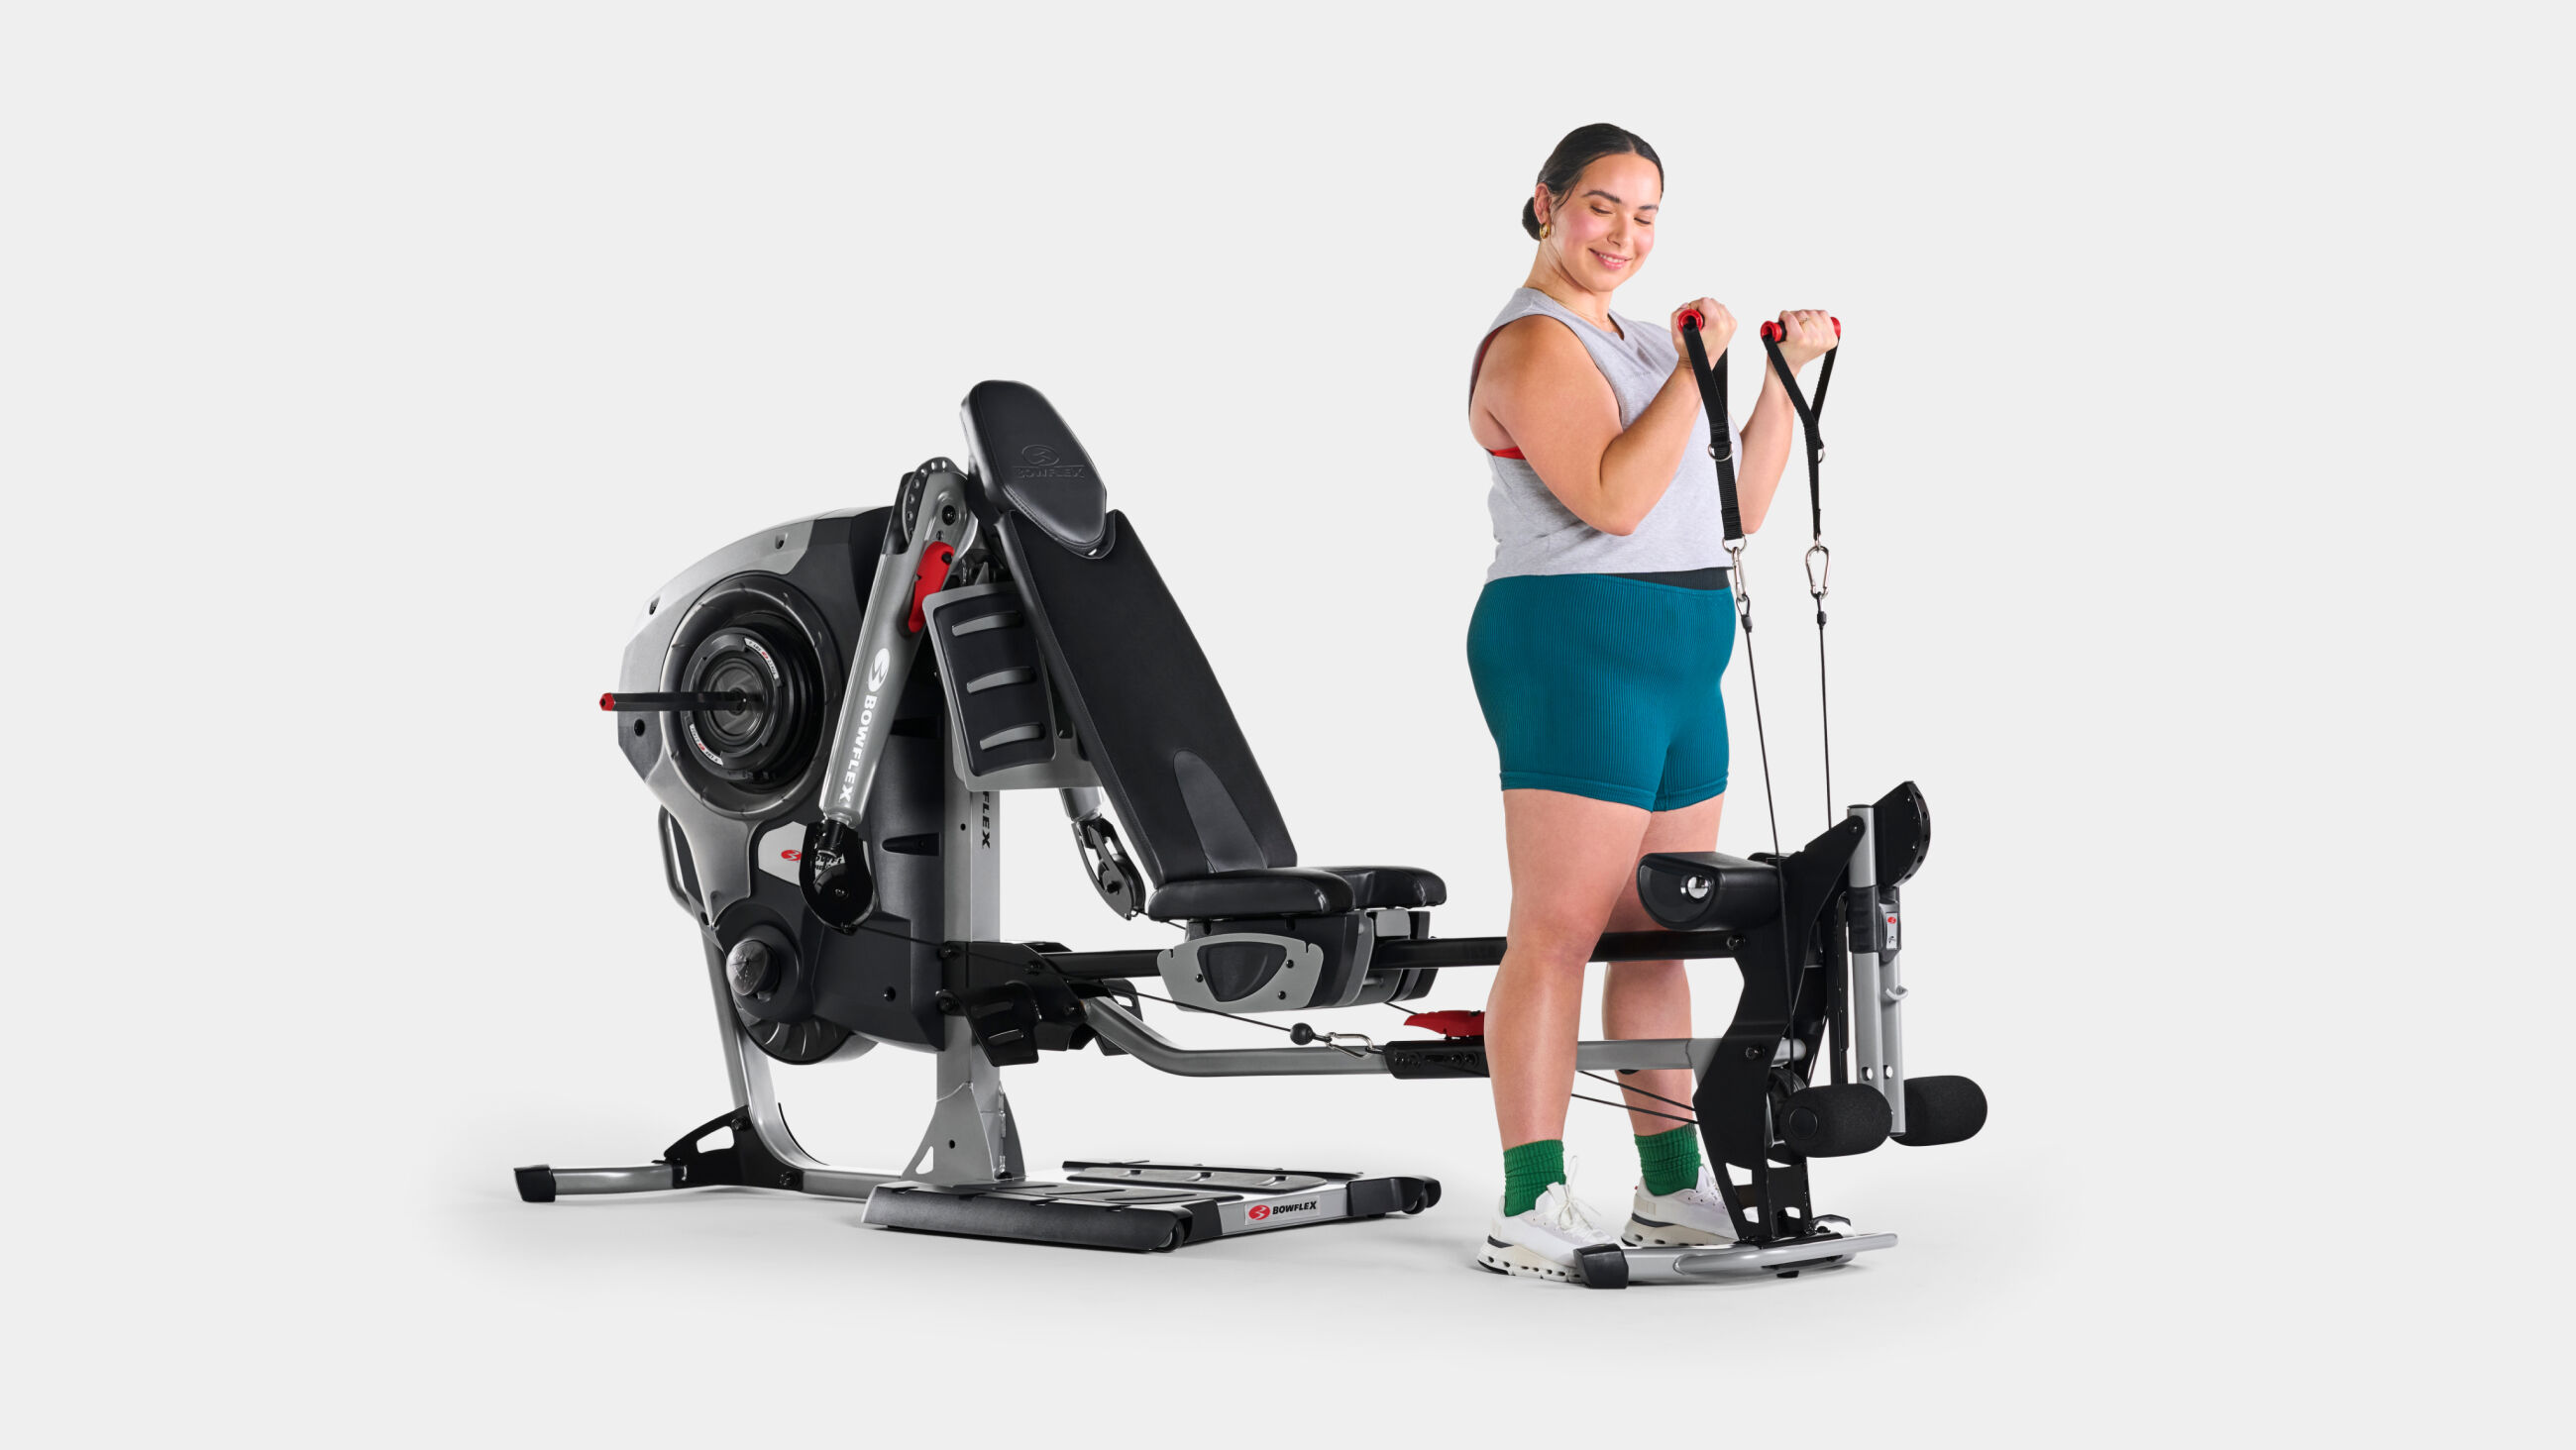 Body Flex Sports Body Power Multi-Purpose Adjustable Fitness Weight Bench 